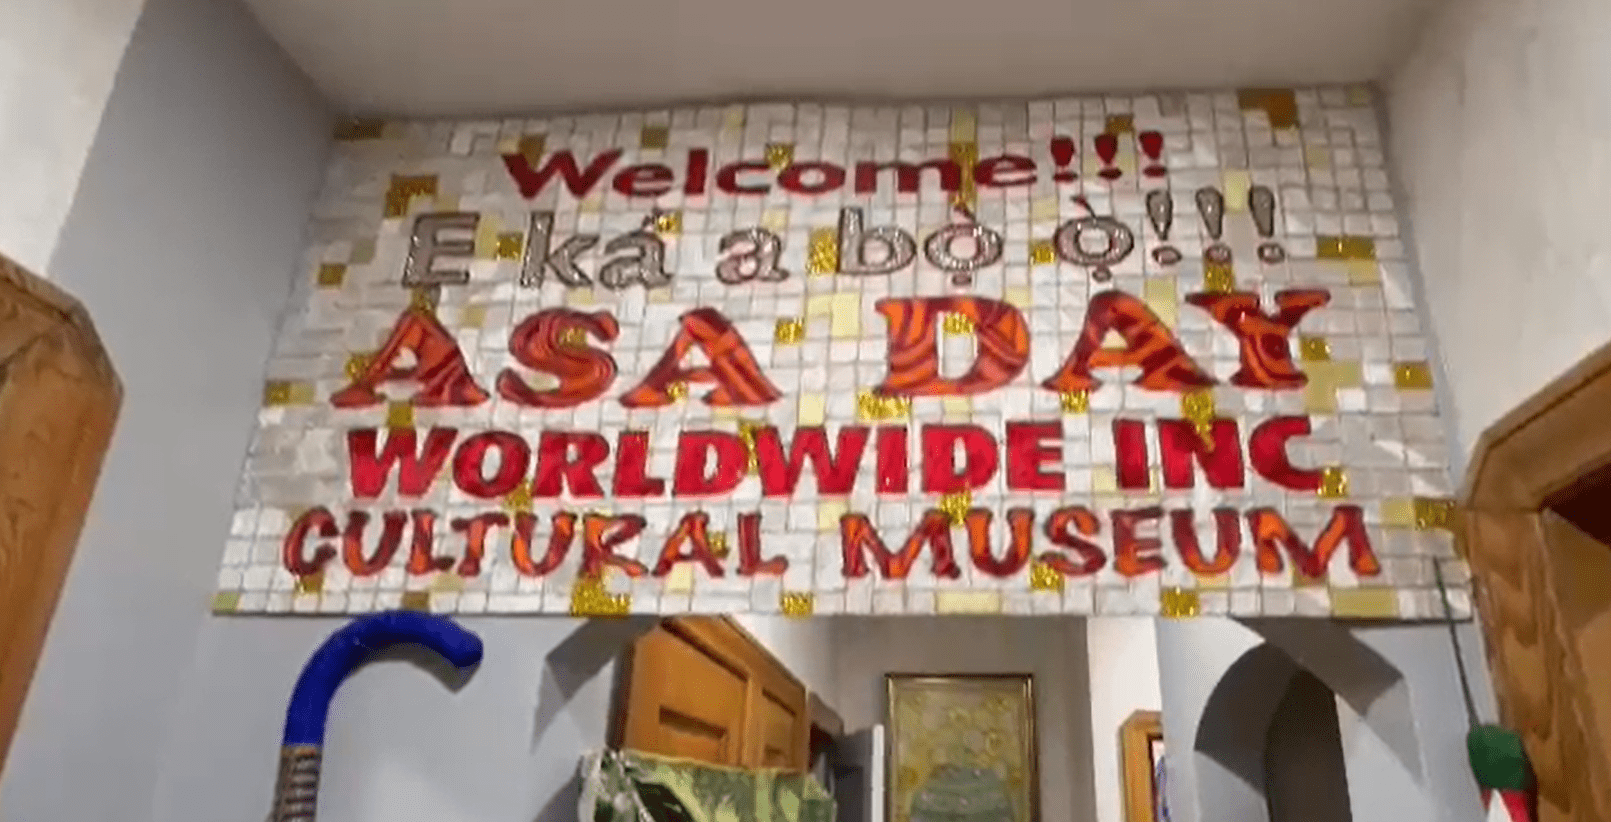 Entrance to the Asa Cultural Museum celebrating Yoruba culture.